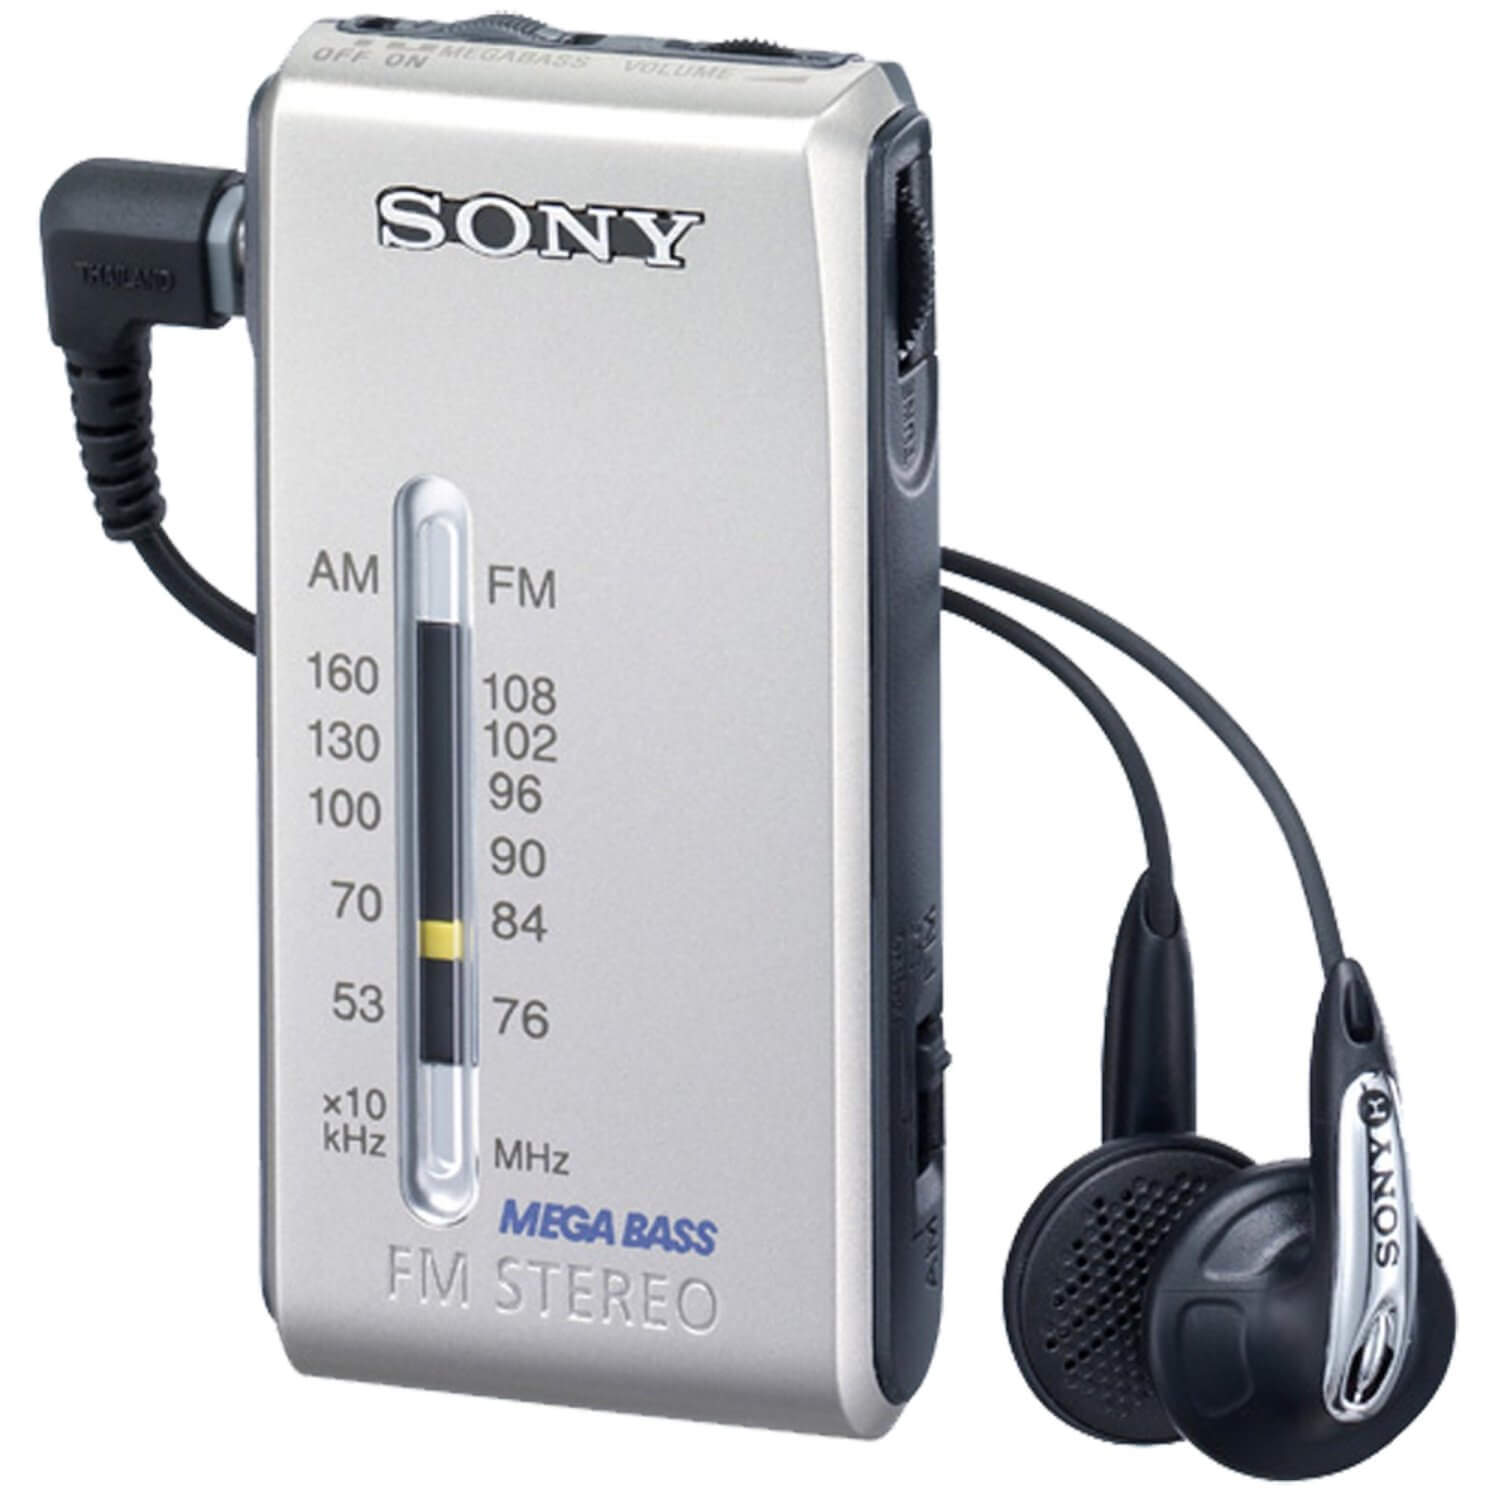 Sony SRF-S84 FM AM Super Compact Radio Walkman